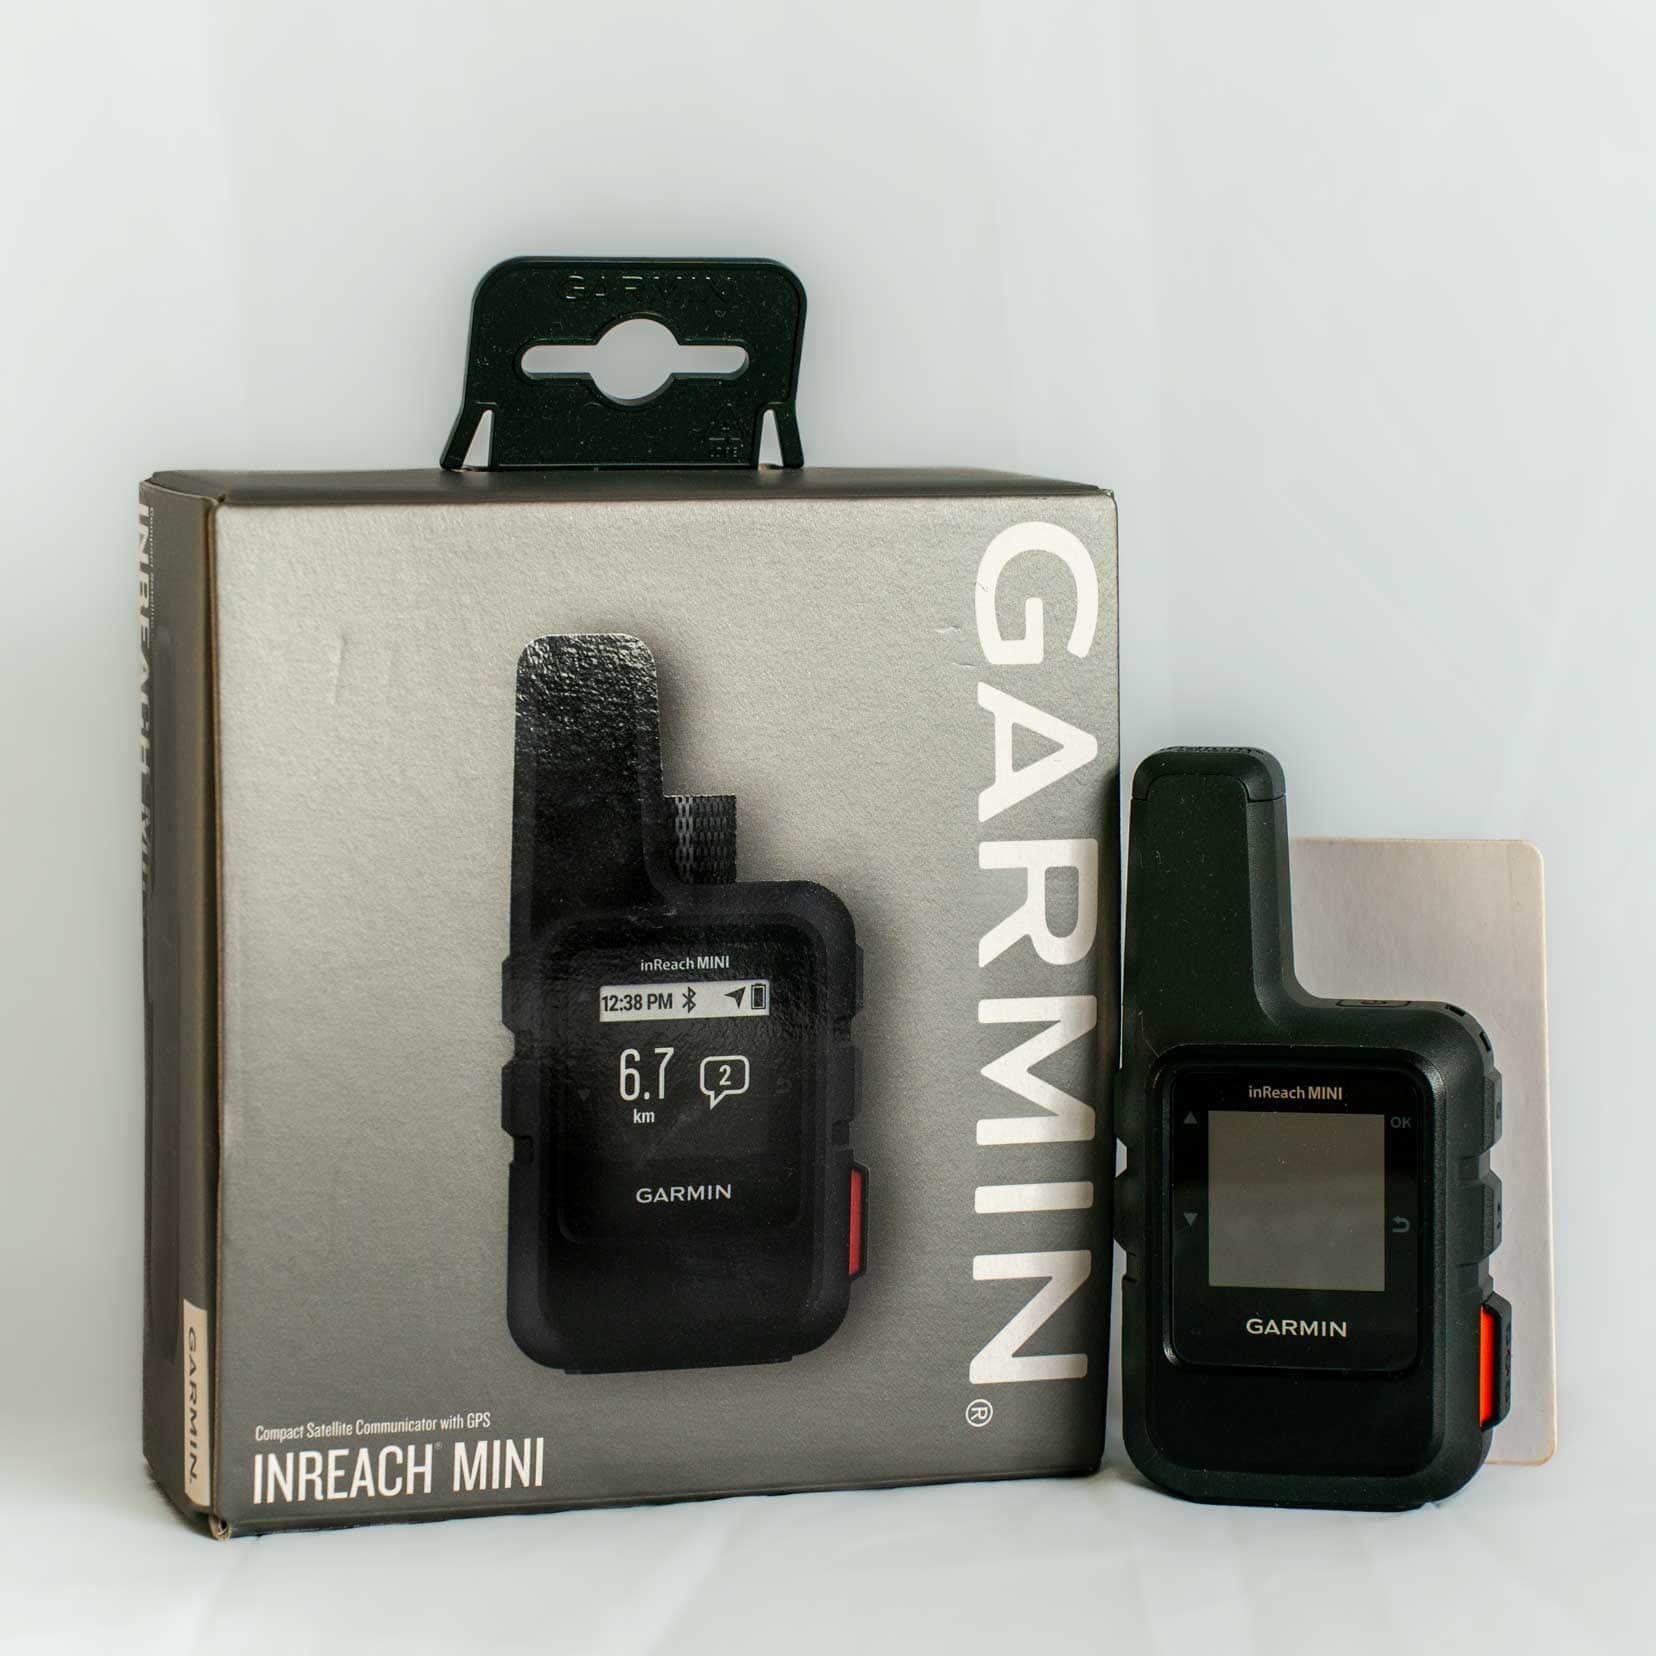 Garmin InReach mini gps device